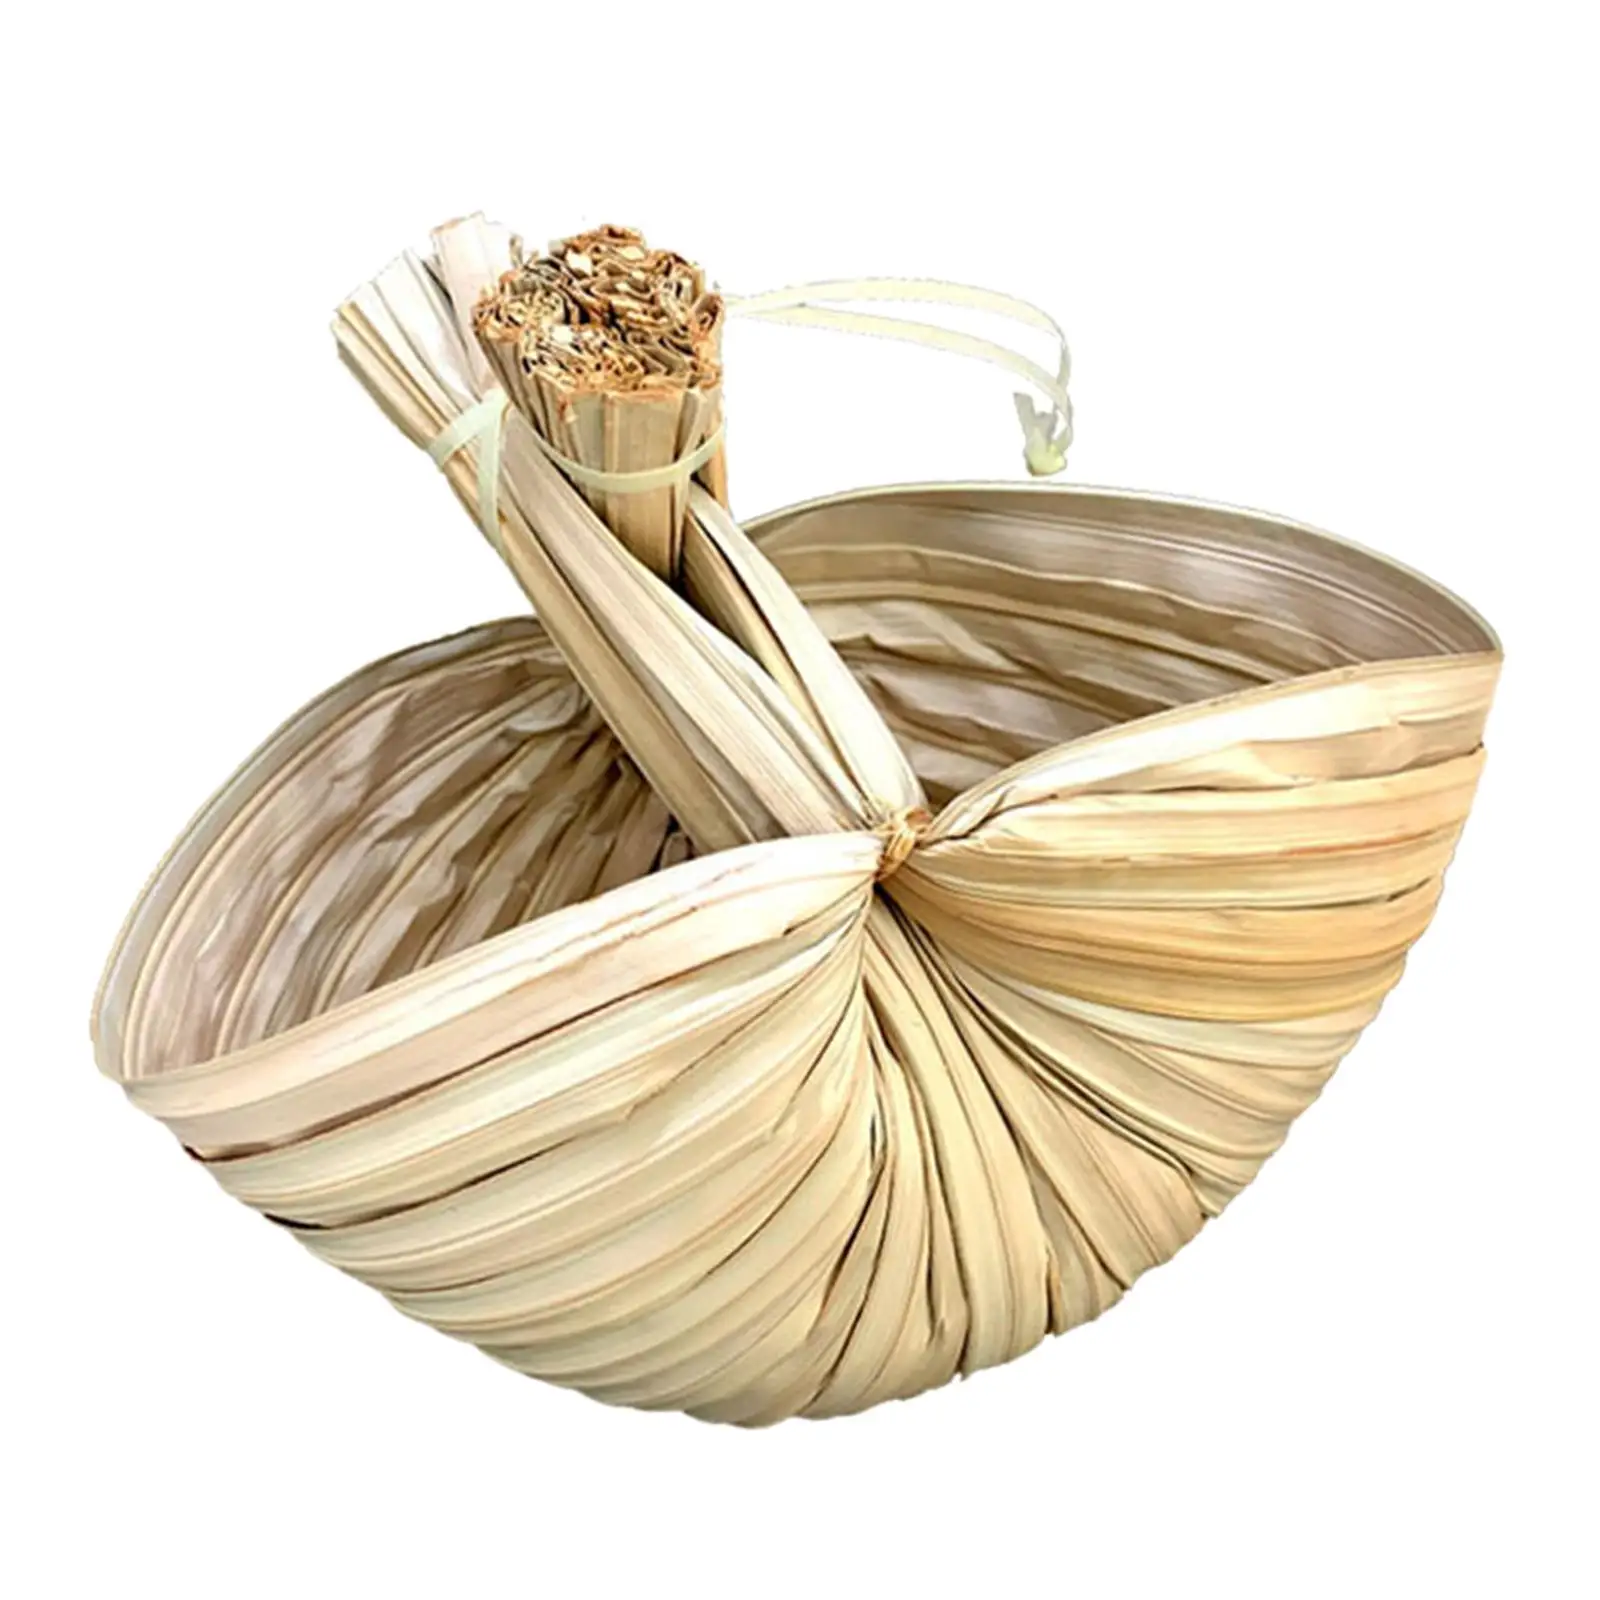 Portable Woven Basket Dessert Storage Decorative Home Decor Ornament Crafts Fruit Bowl for Bathroom Shopping Picnic